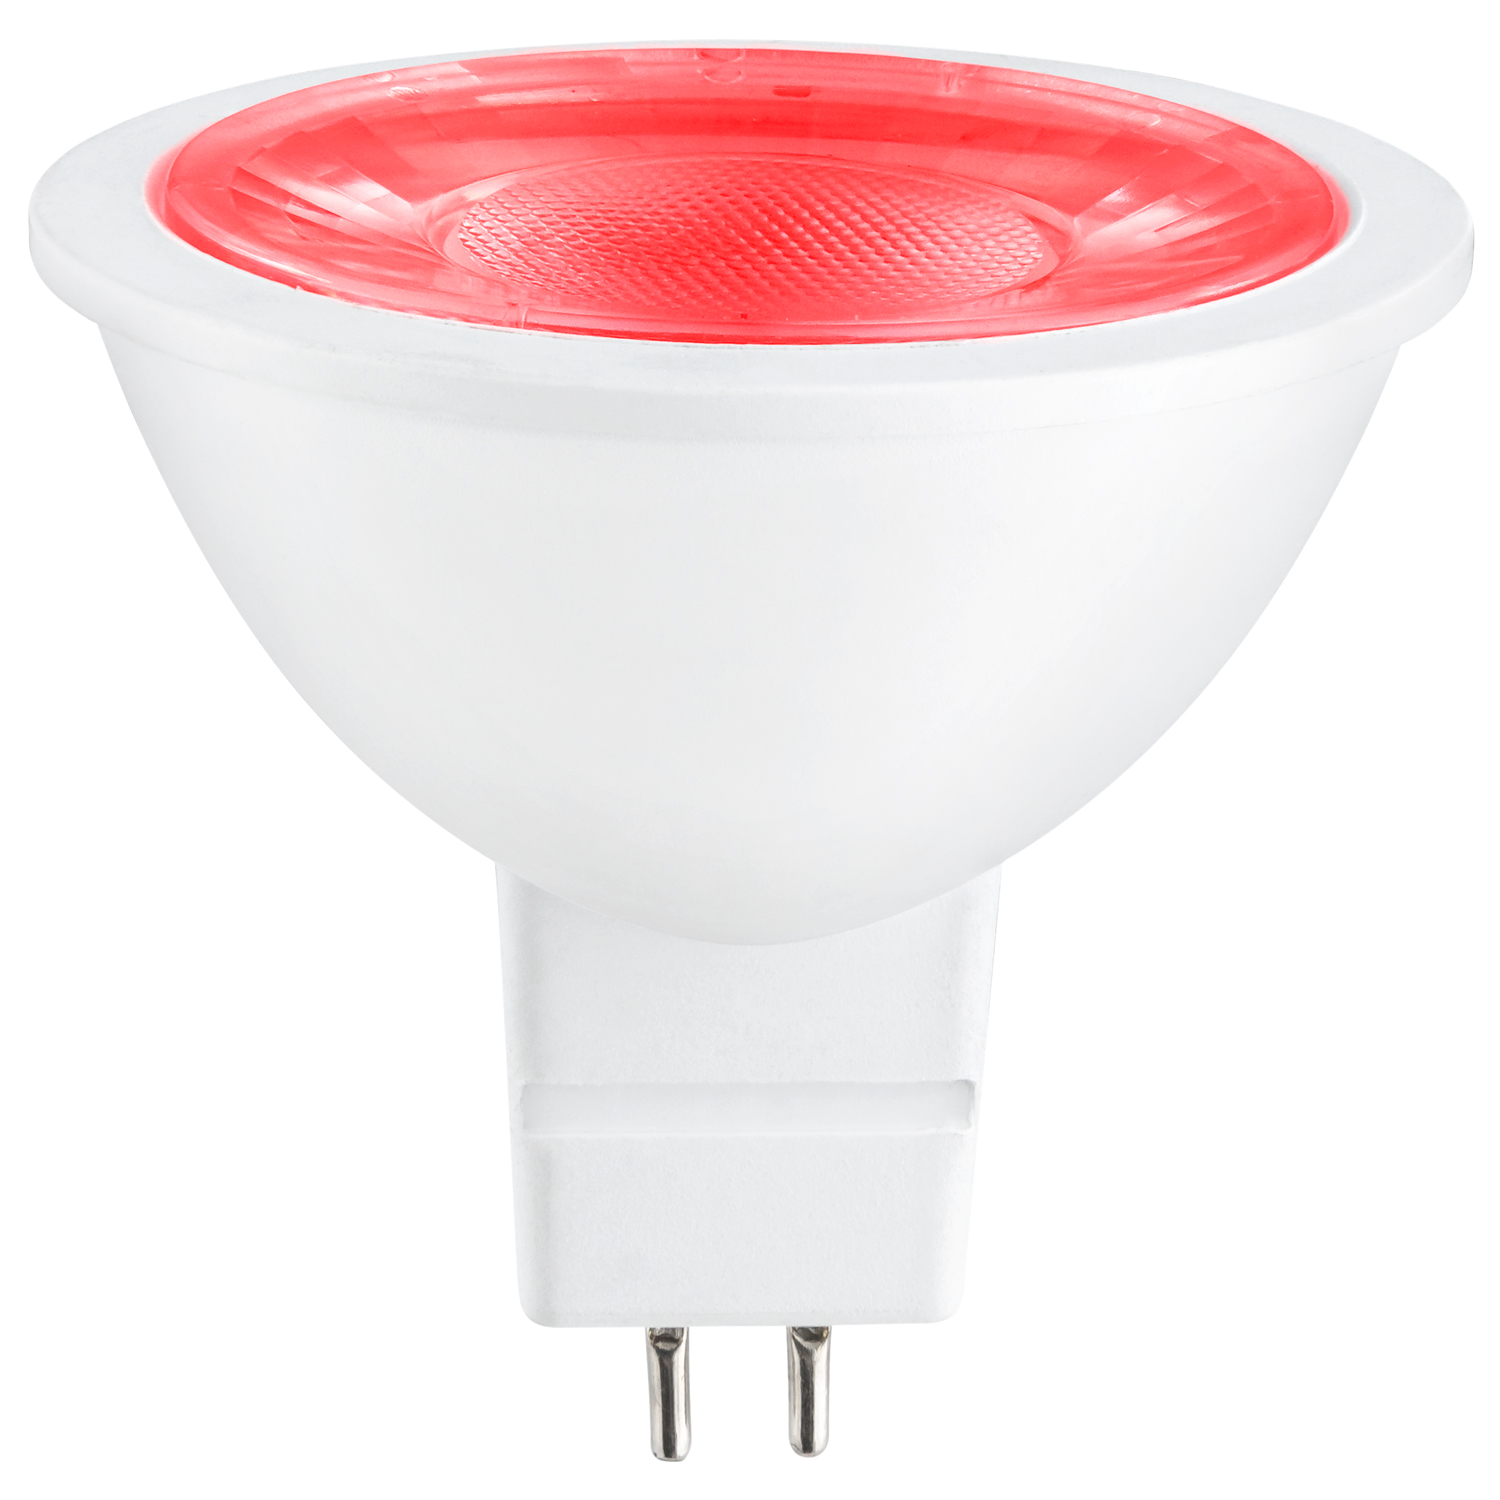 LED MR16 Light Bulb GU5.3 25-Watt Equivalent, Red